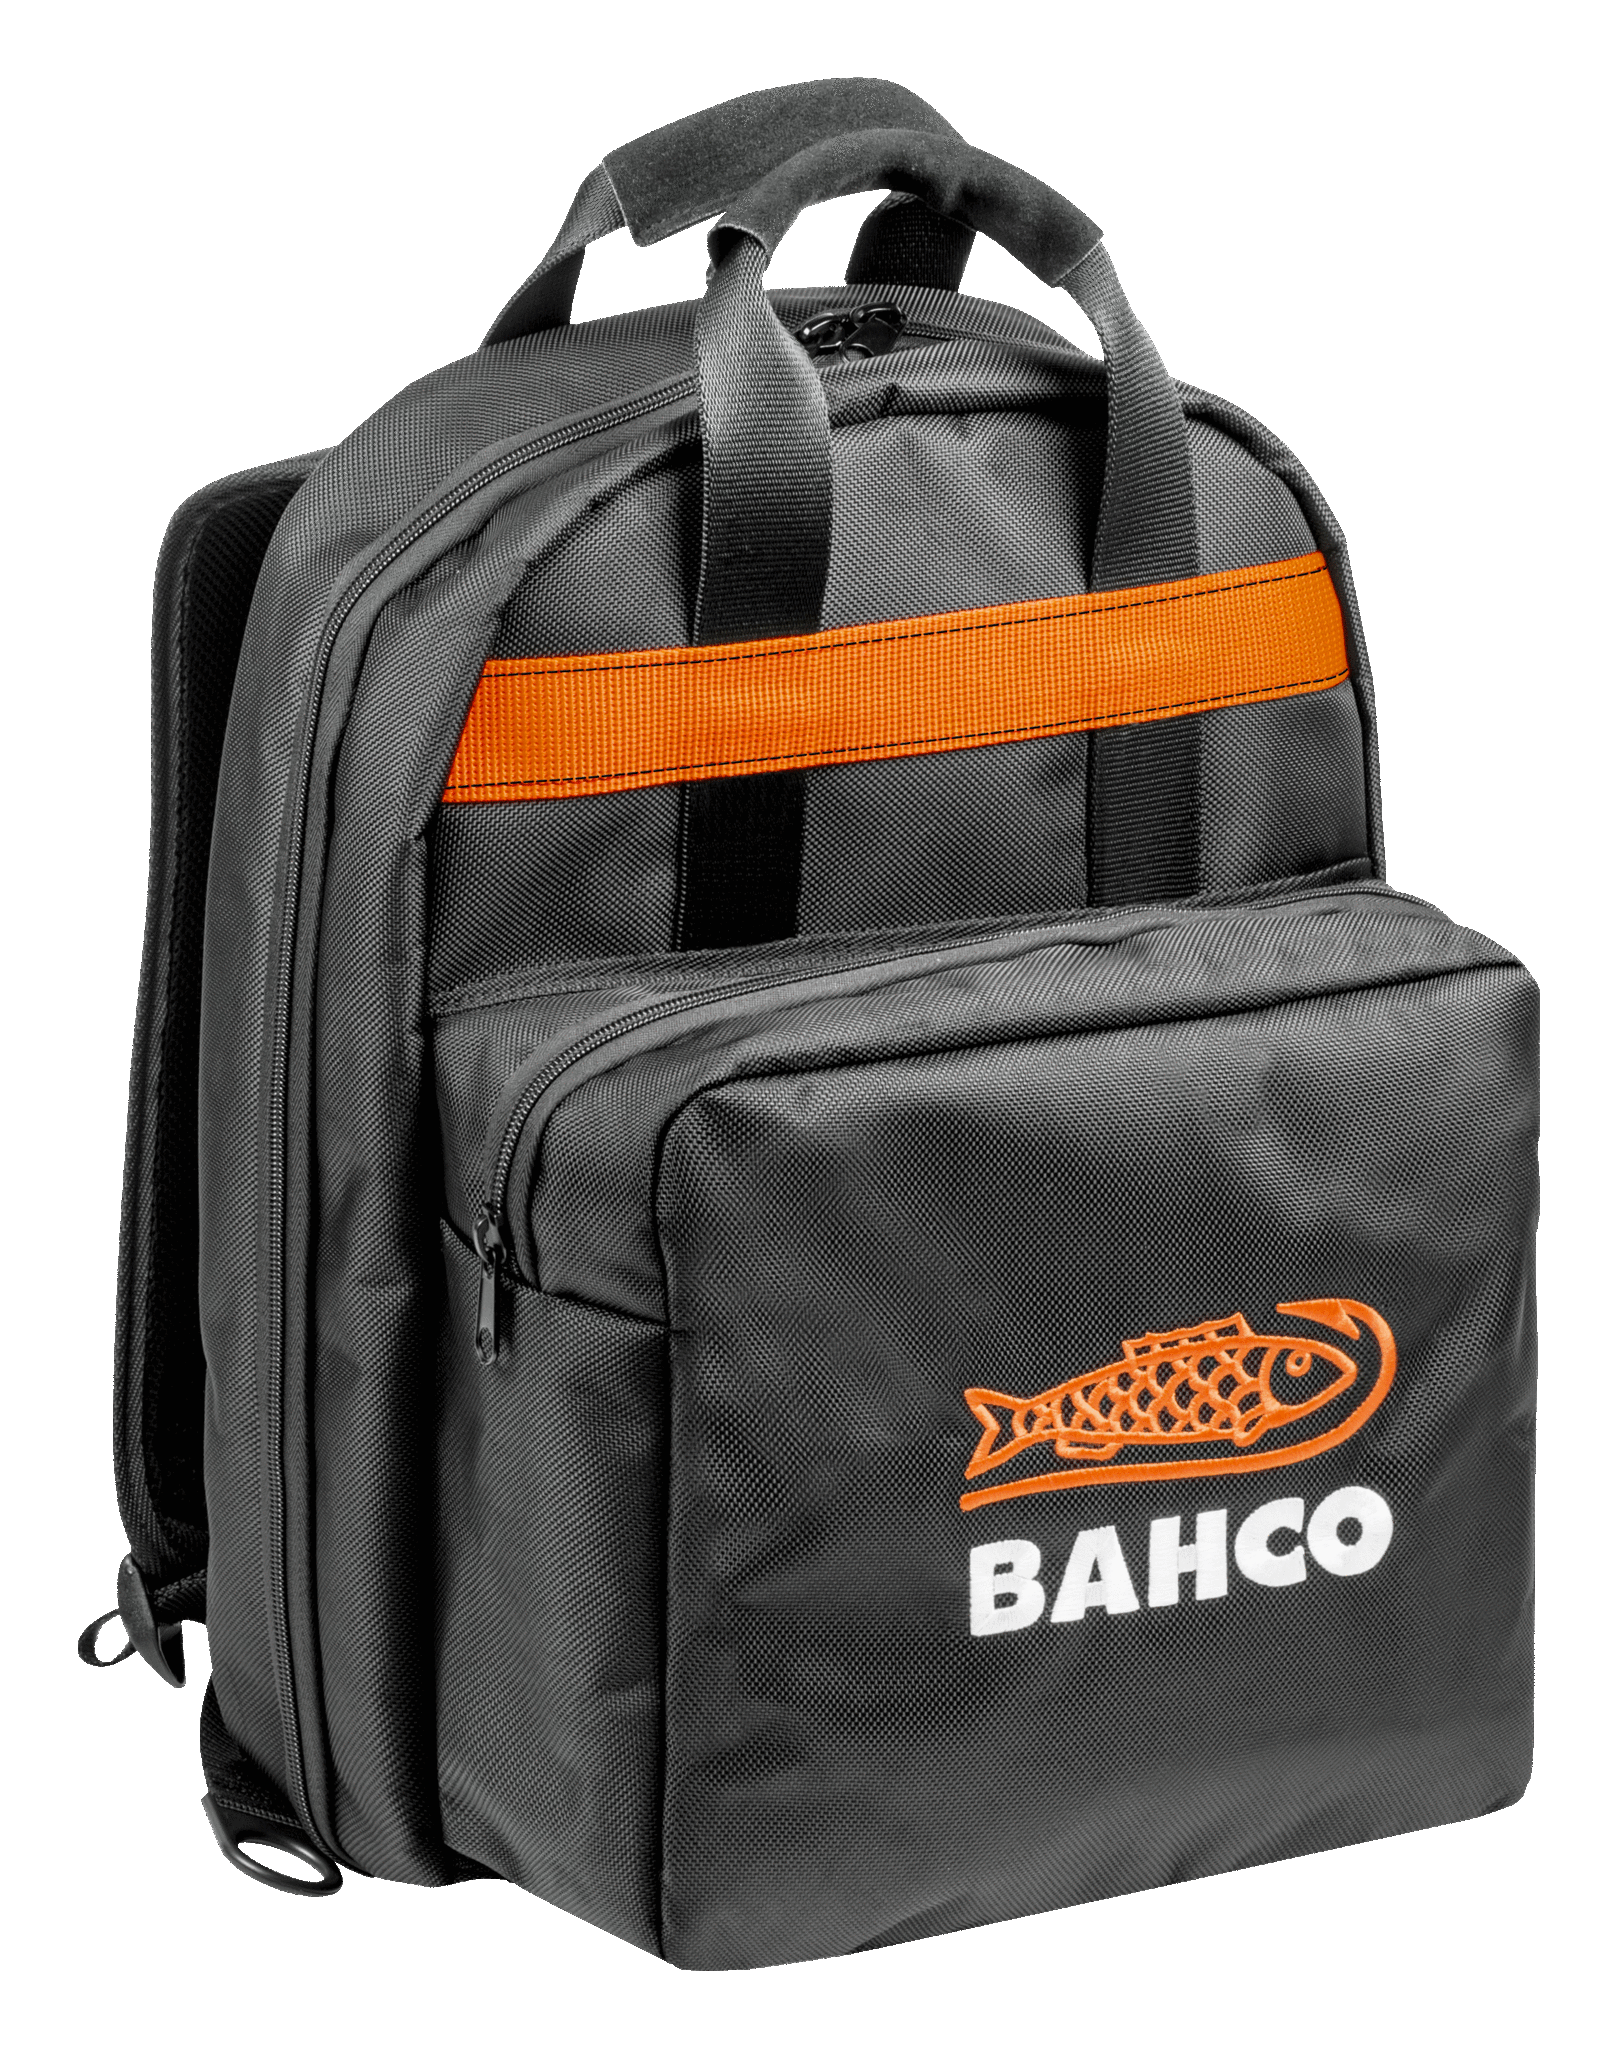 BAHCO(バーコ) Back Pack リュックサック ラージ 3875-BP2 - 4